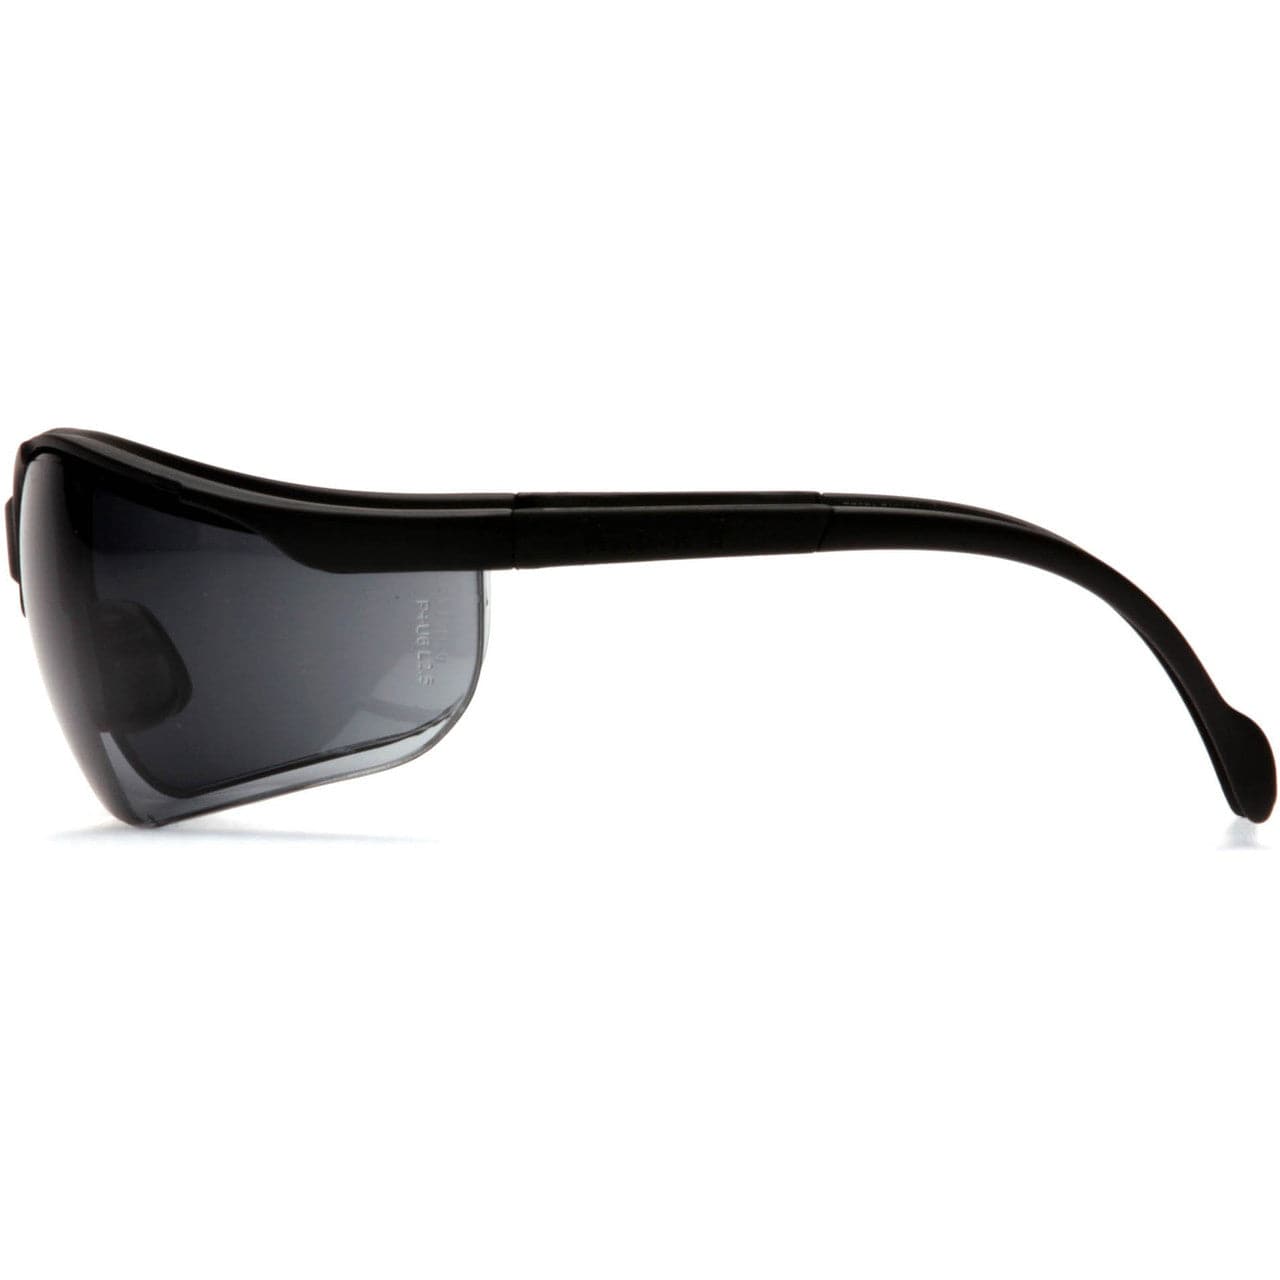 Pyramex Venture 2 Safety Glasses Black Frame Gray Anti-Fog Lens SB1820ST Side View